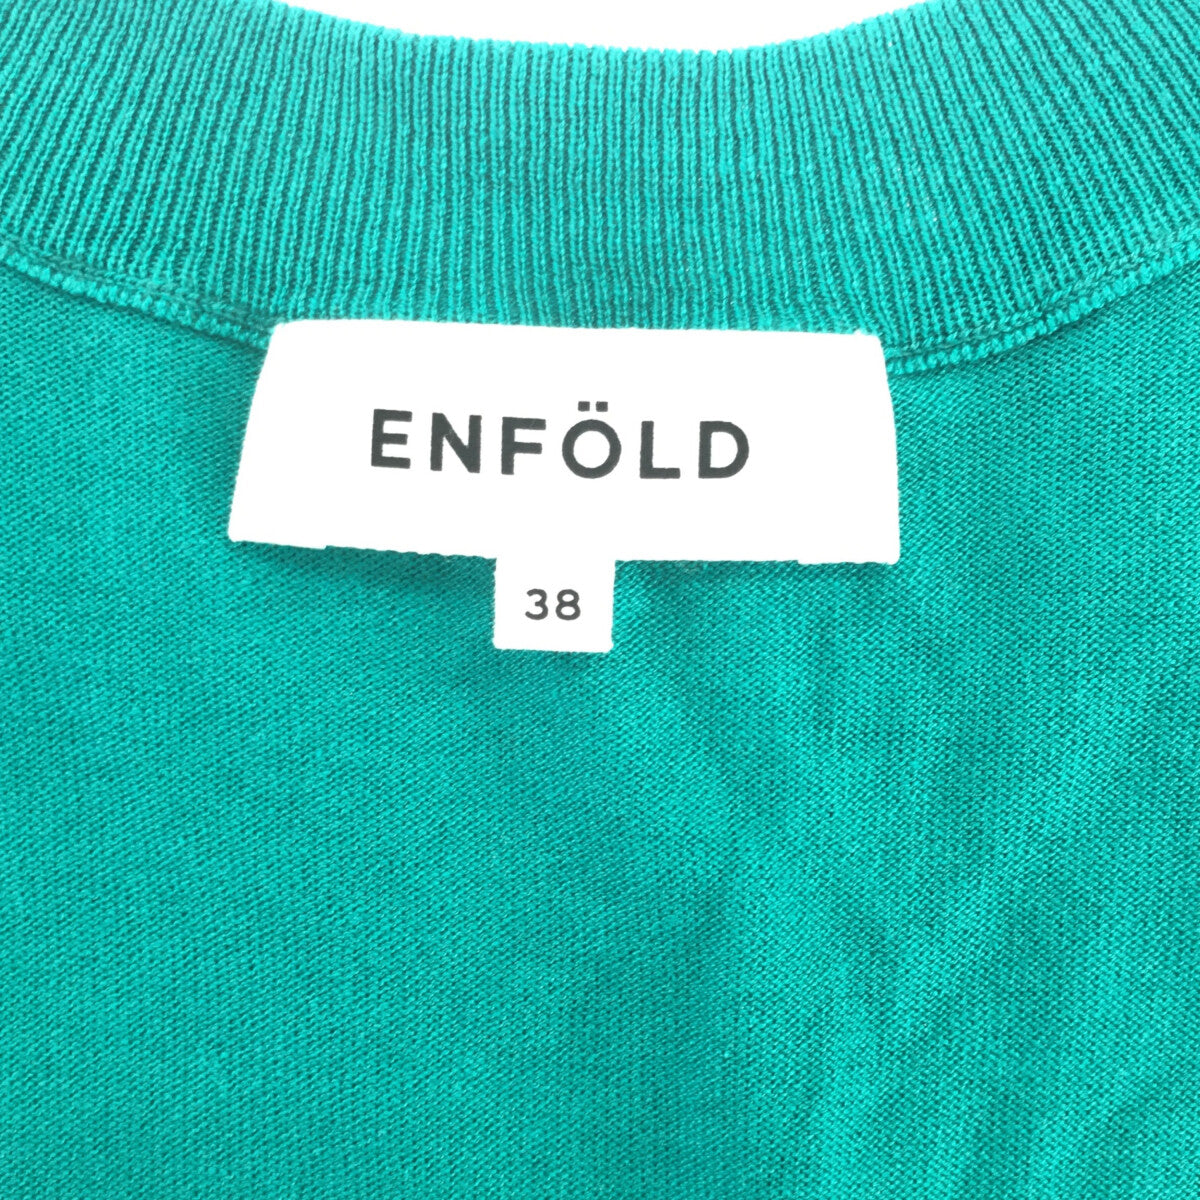 ENFOLD / エンフォルド | シルクコットン VネックワイドPO ニット | 38 